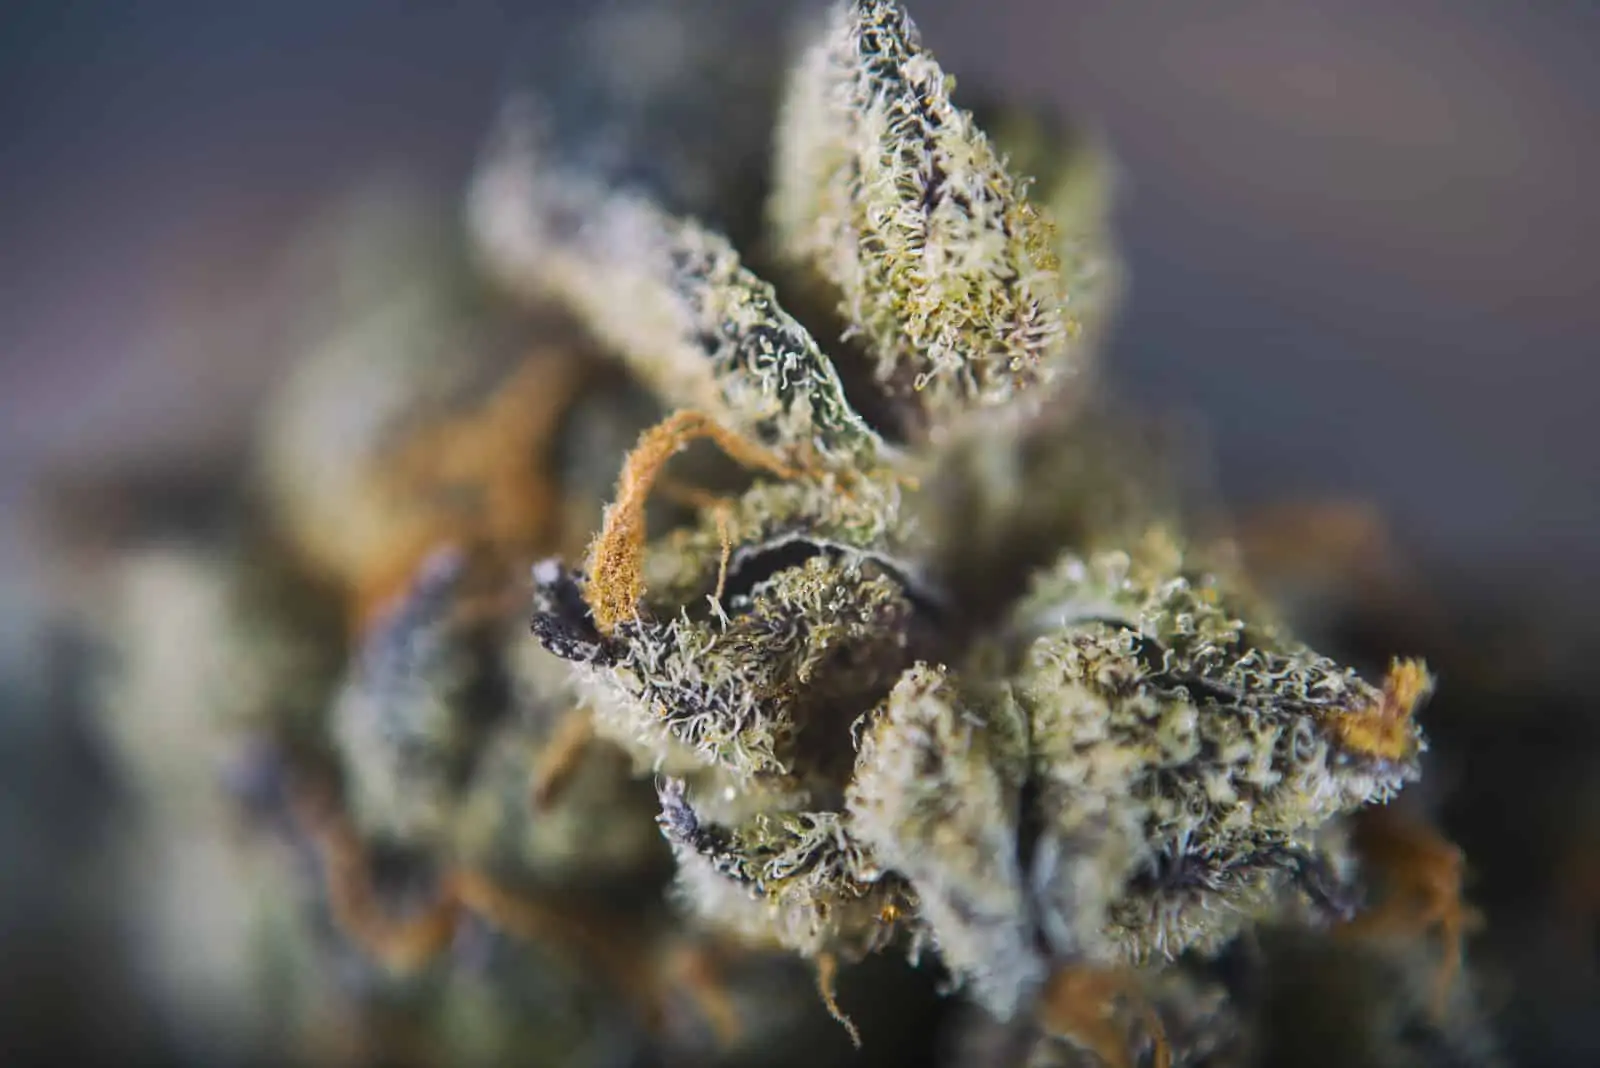 Girl Scout Cookies Marijuana Strain Review. Brown flower bud